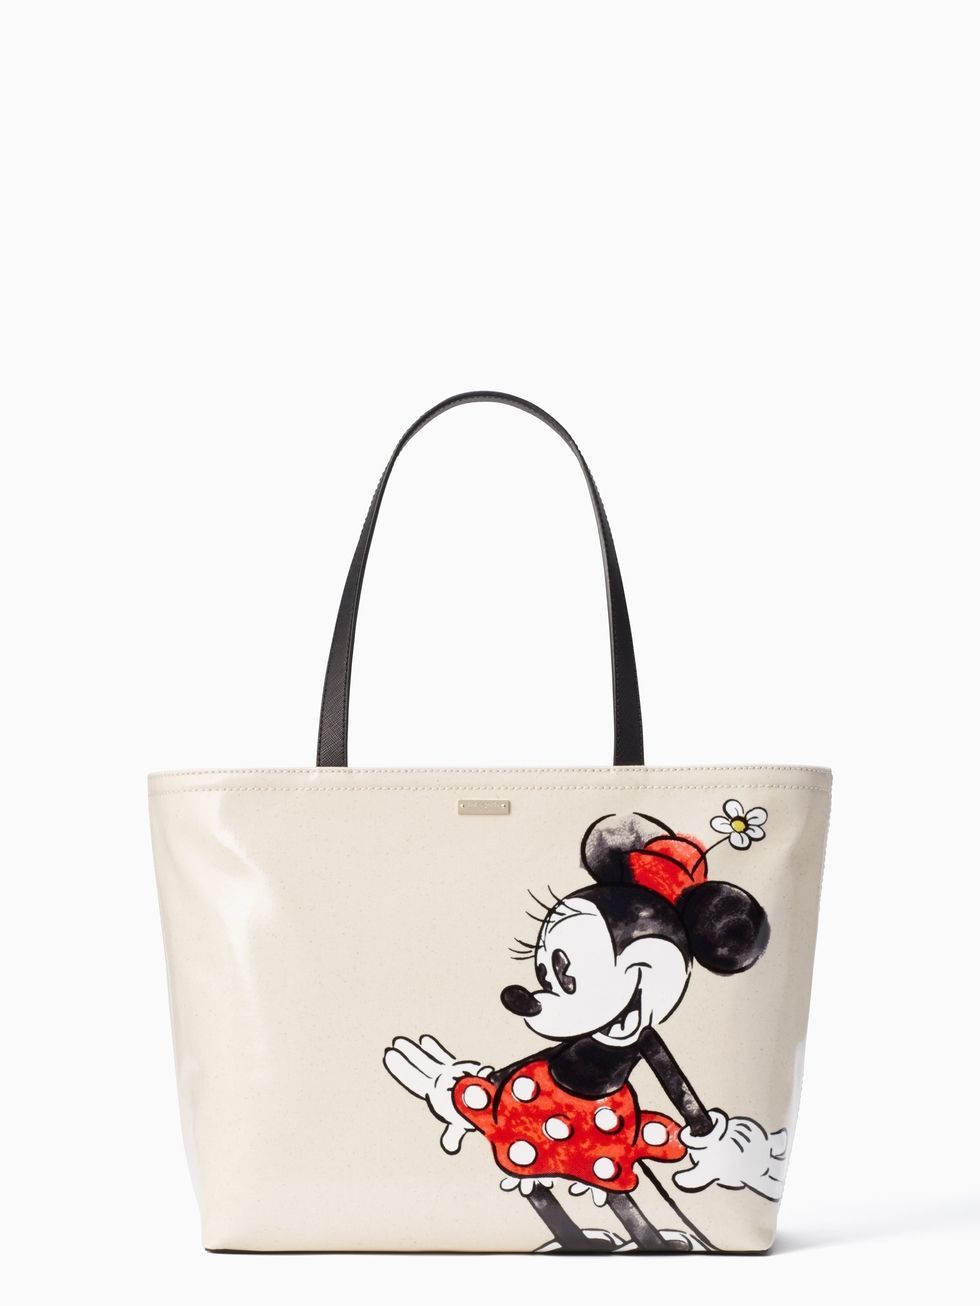 Kate Spade Minnie Mouse Disney N/S Phone Crossbody Bag Purse Black White  NWT | eBay